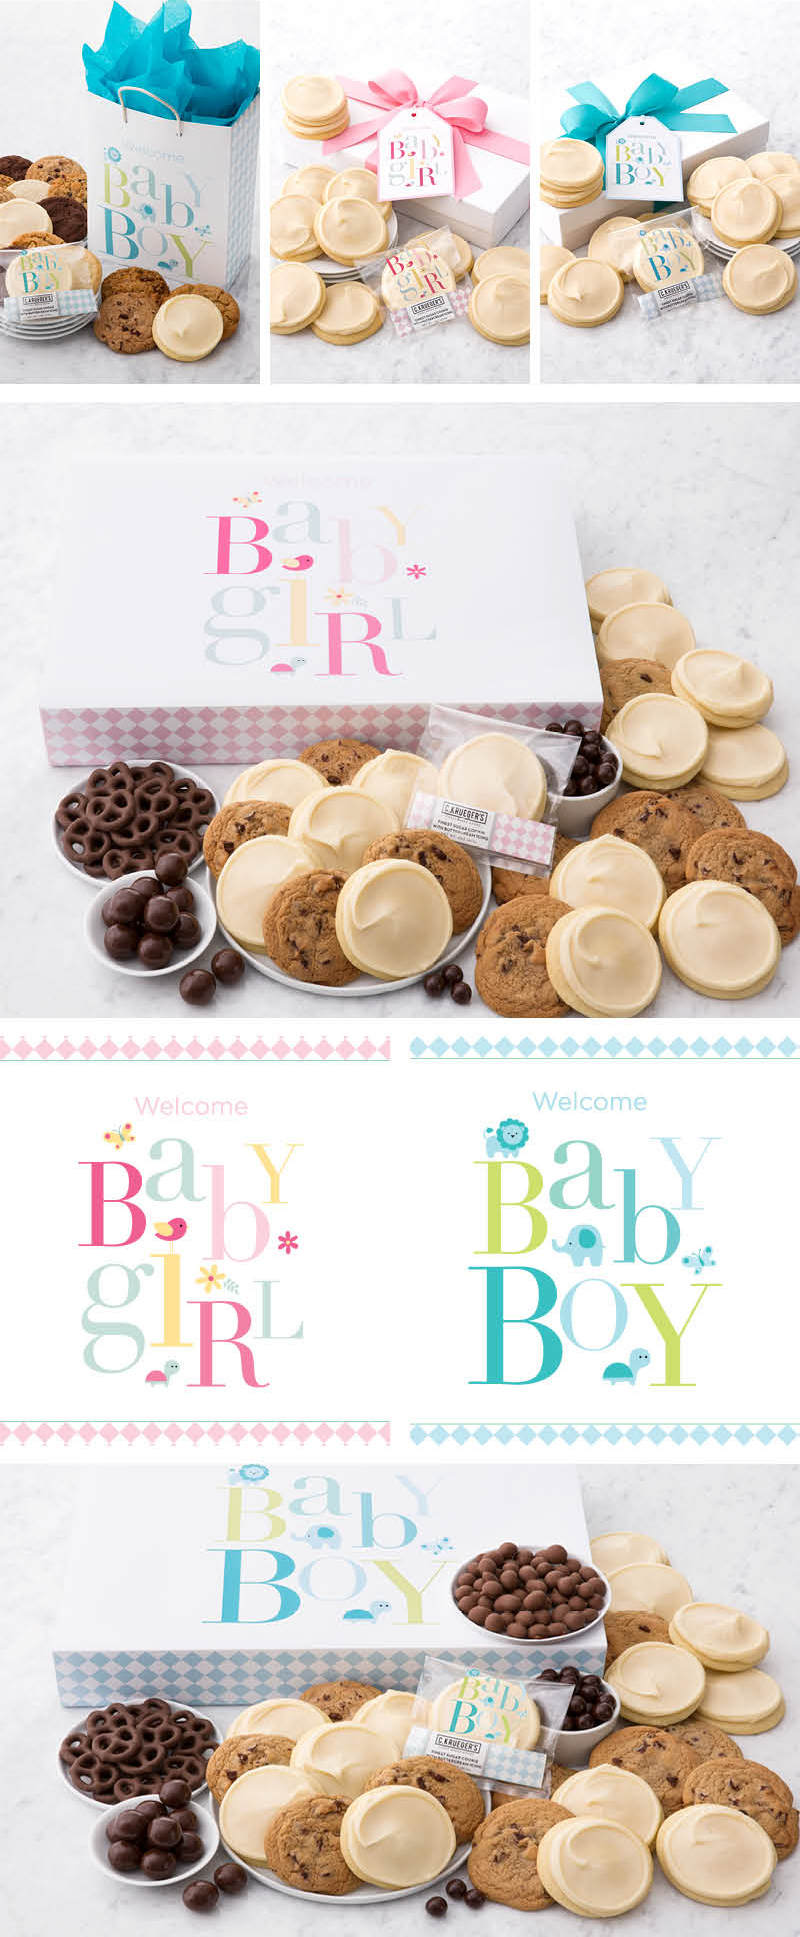 C.Krueger’s Baby Girl Baby Boy Packaging